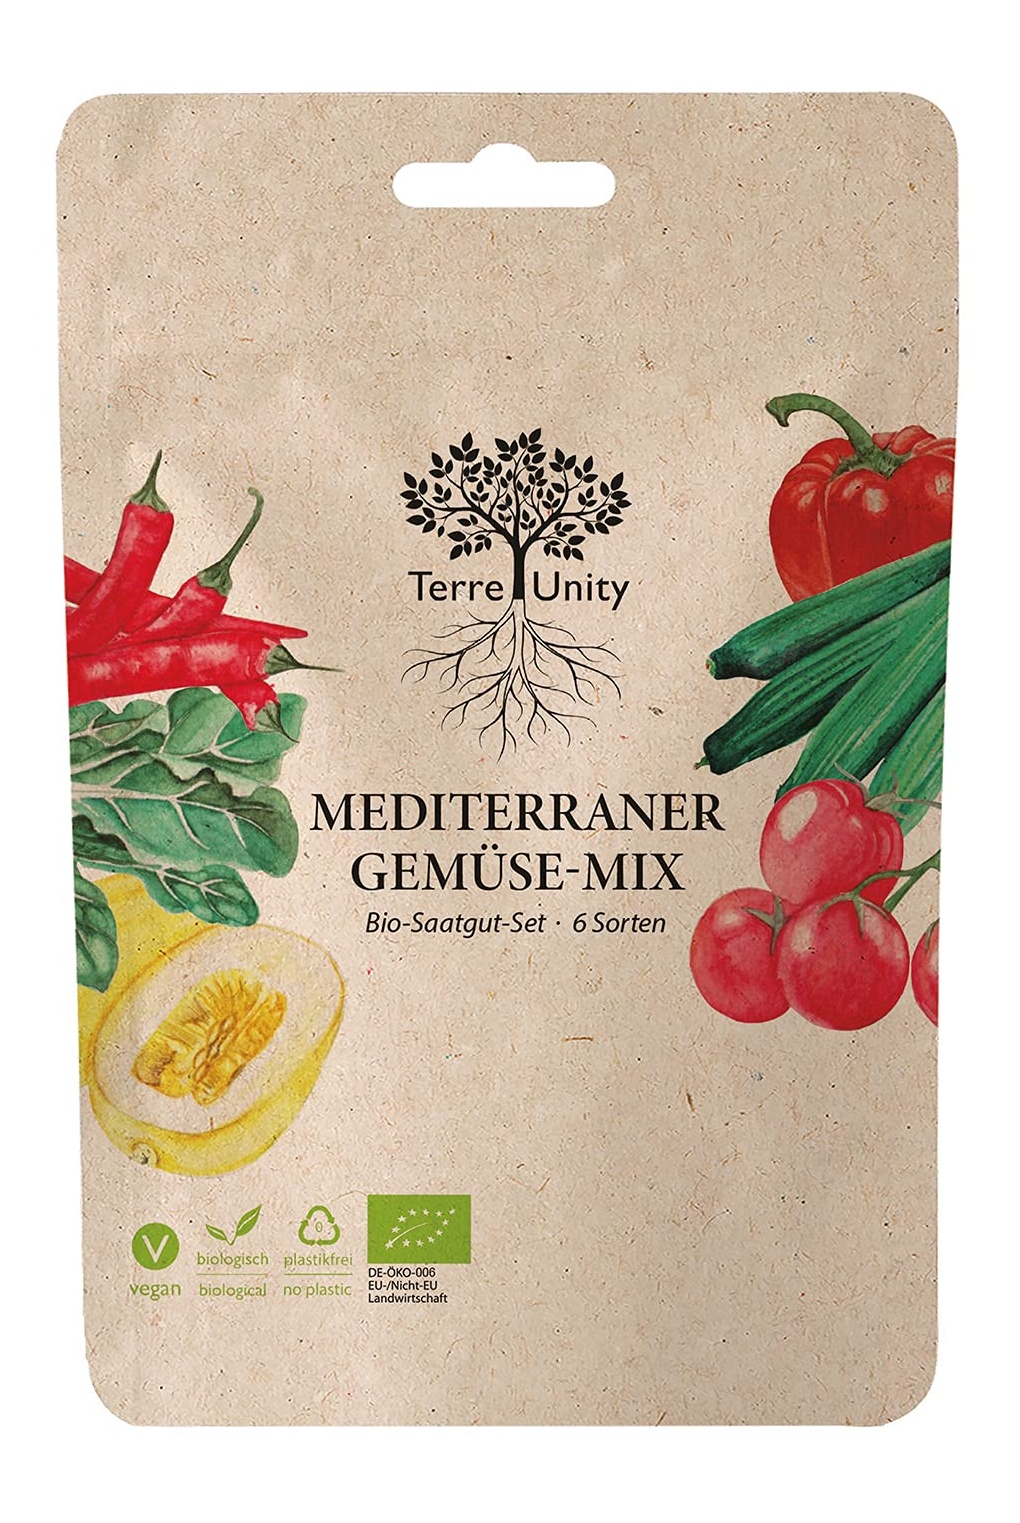 Bild Terre Unity Bio Saatgut - Mediterraner Gemüse-Mix - Paprika - Cherrytomate - Mangold - Spaghetti-Kürbis - Salatgurke - Chili - vegan - plastikfrei